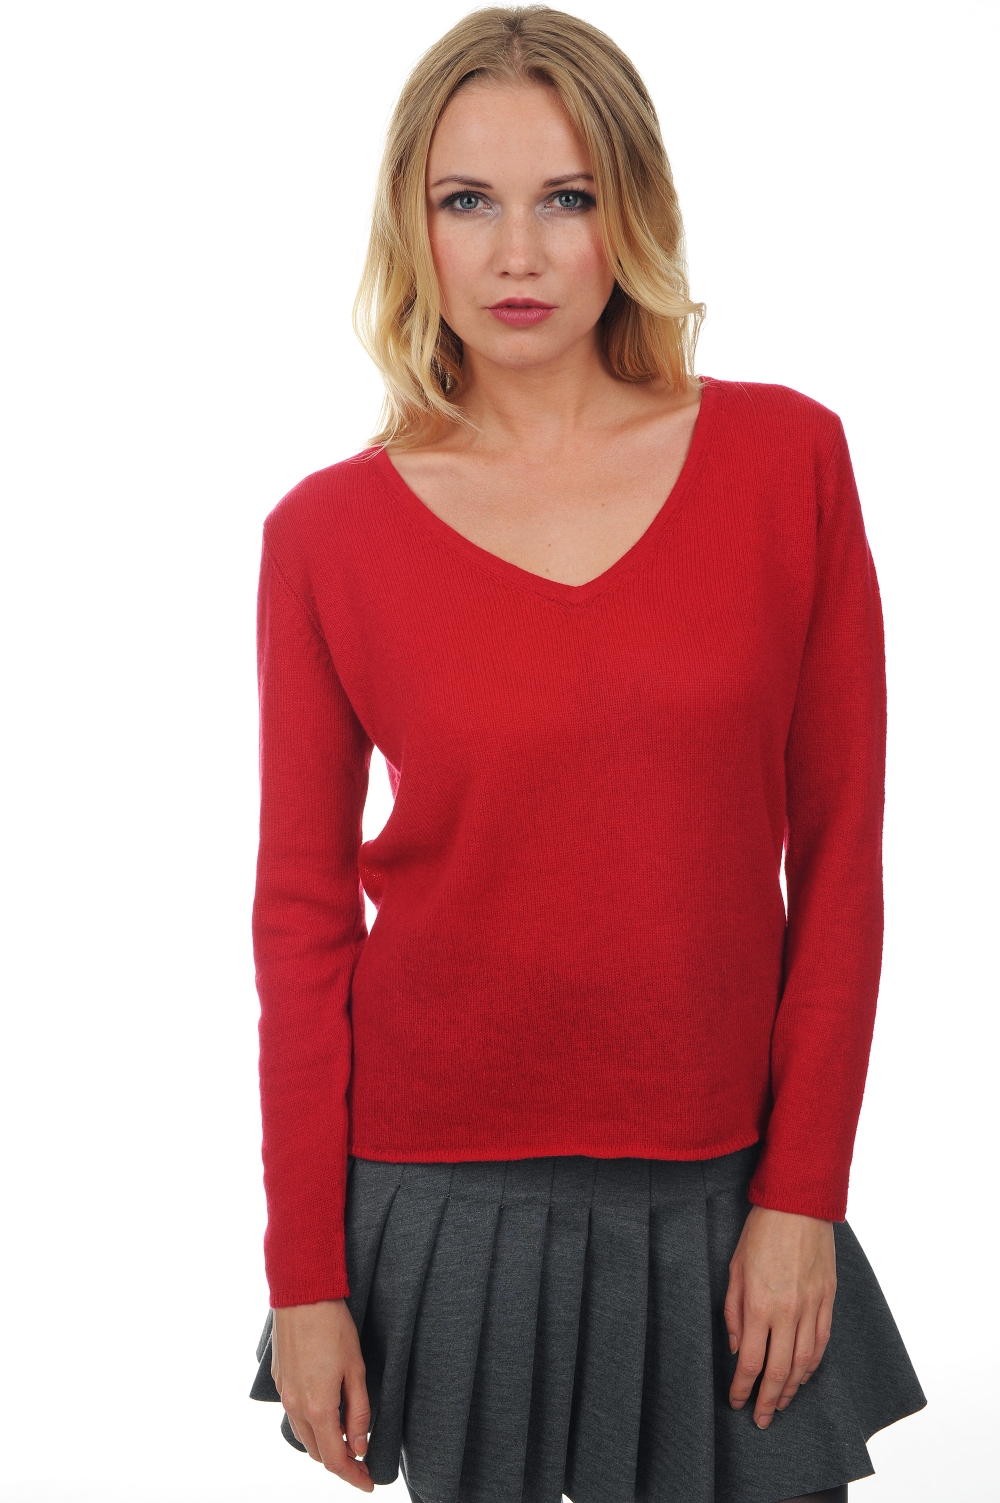 Cashmere cashmere donna essenziali low cost flavie rosso rubino 4xl